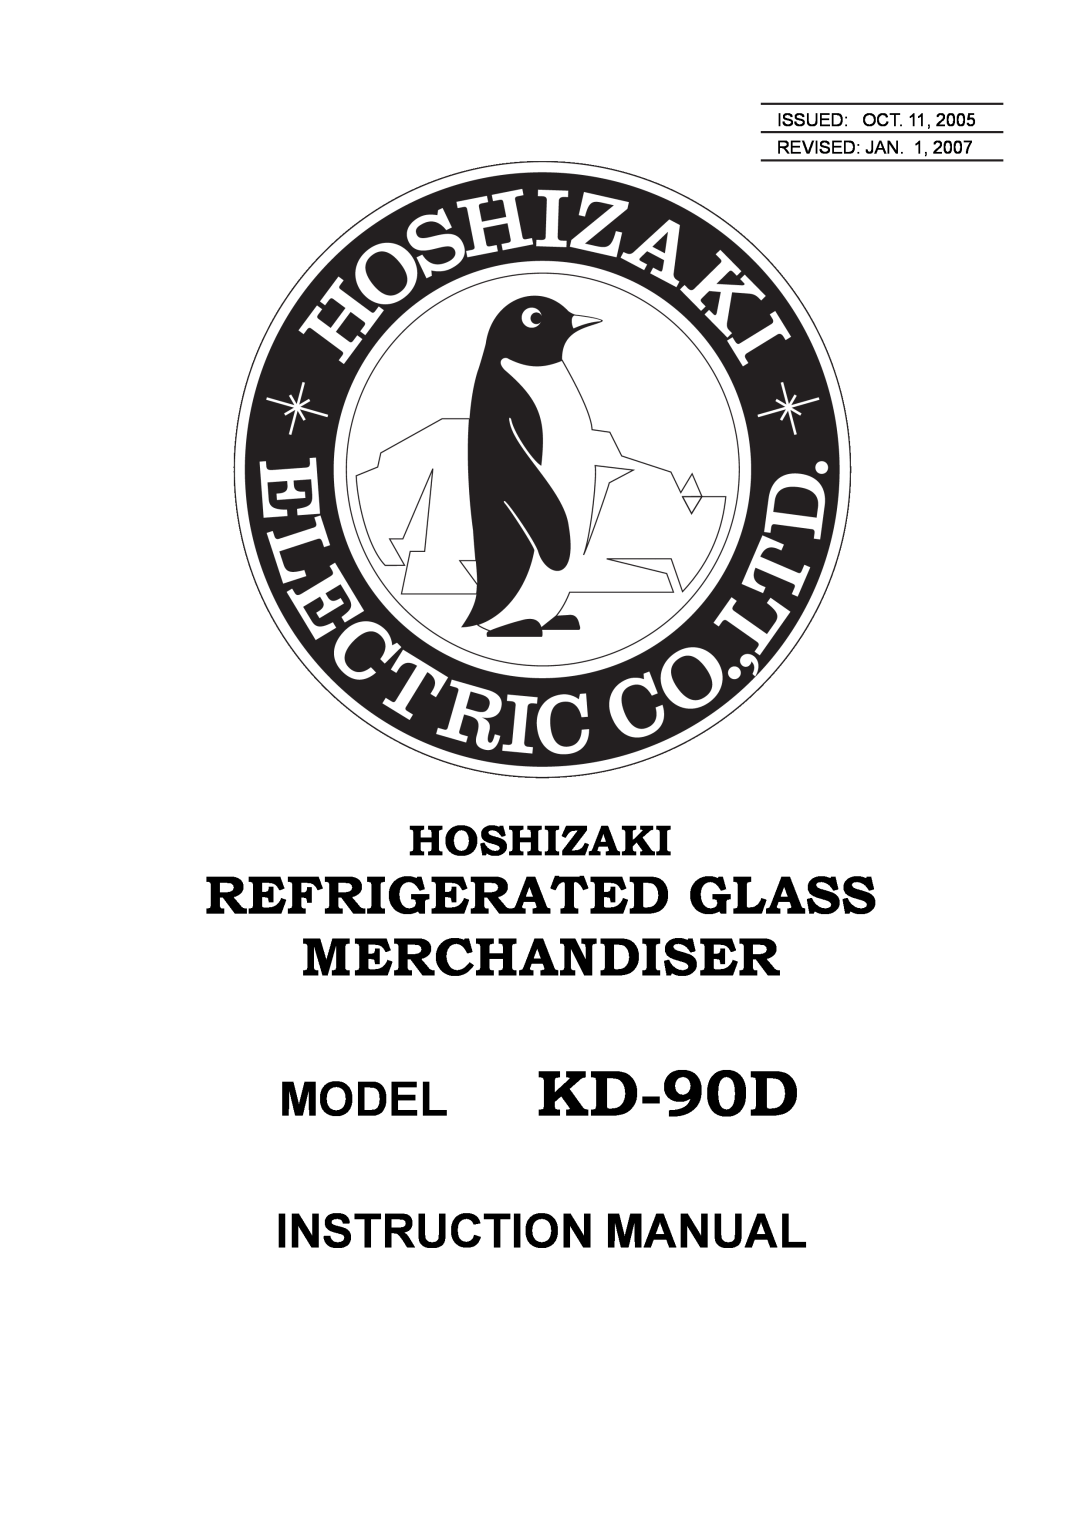 Hoshizaki KD-90D instruction manual Refrigerated Glass Merchandiser, Hoshizaki, ISSUED OCT. 11, REVISED JAN 